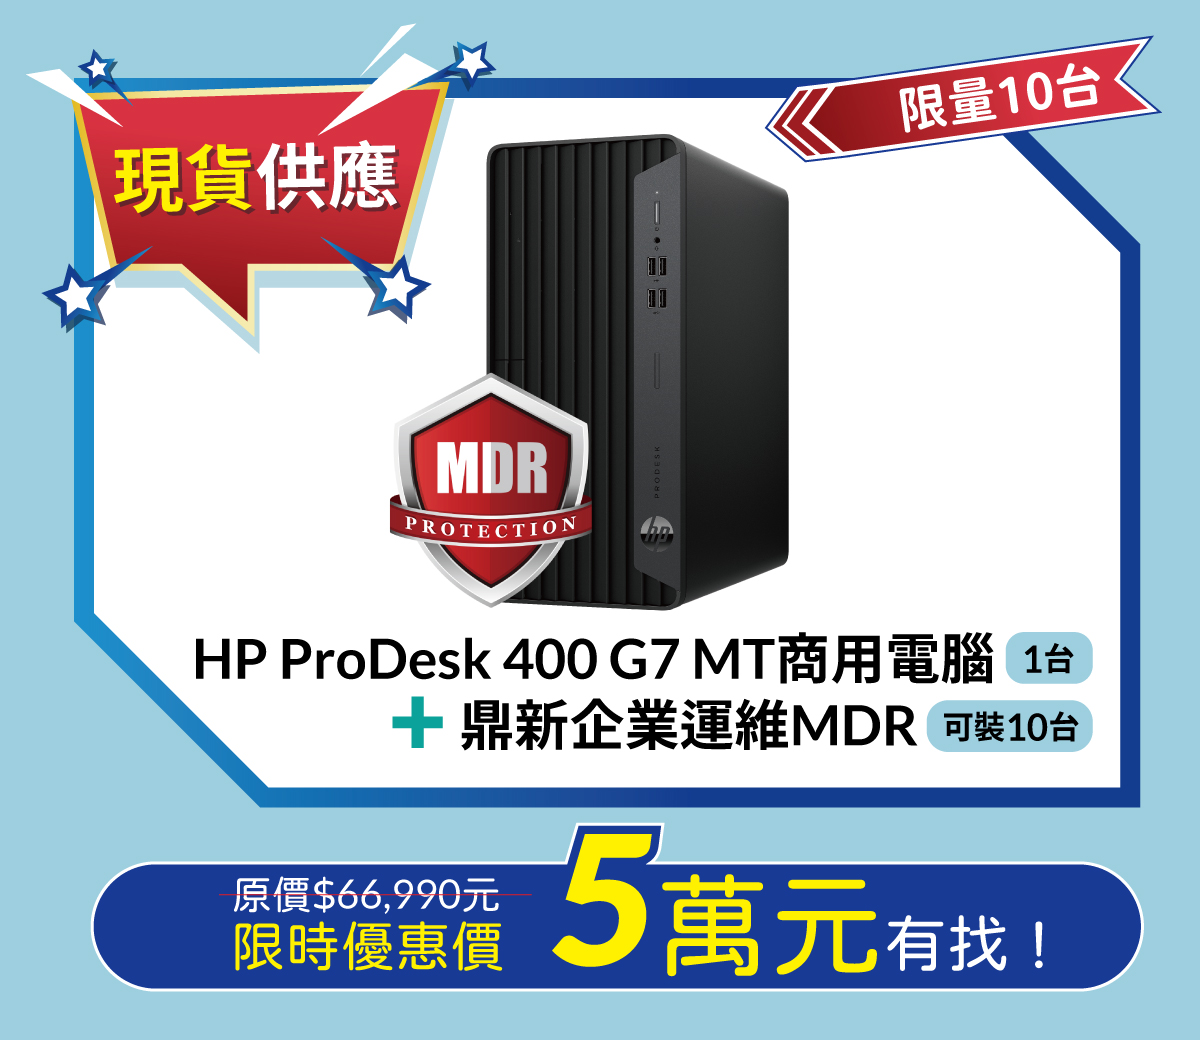 HP ProDesk 400商用桌機+鼎新MDR